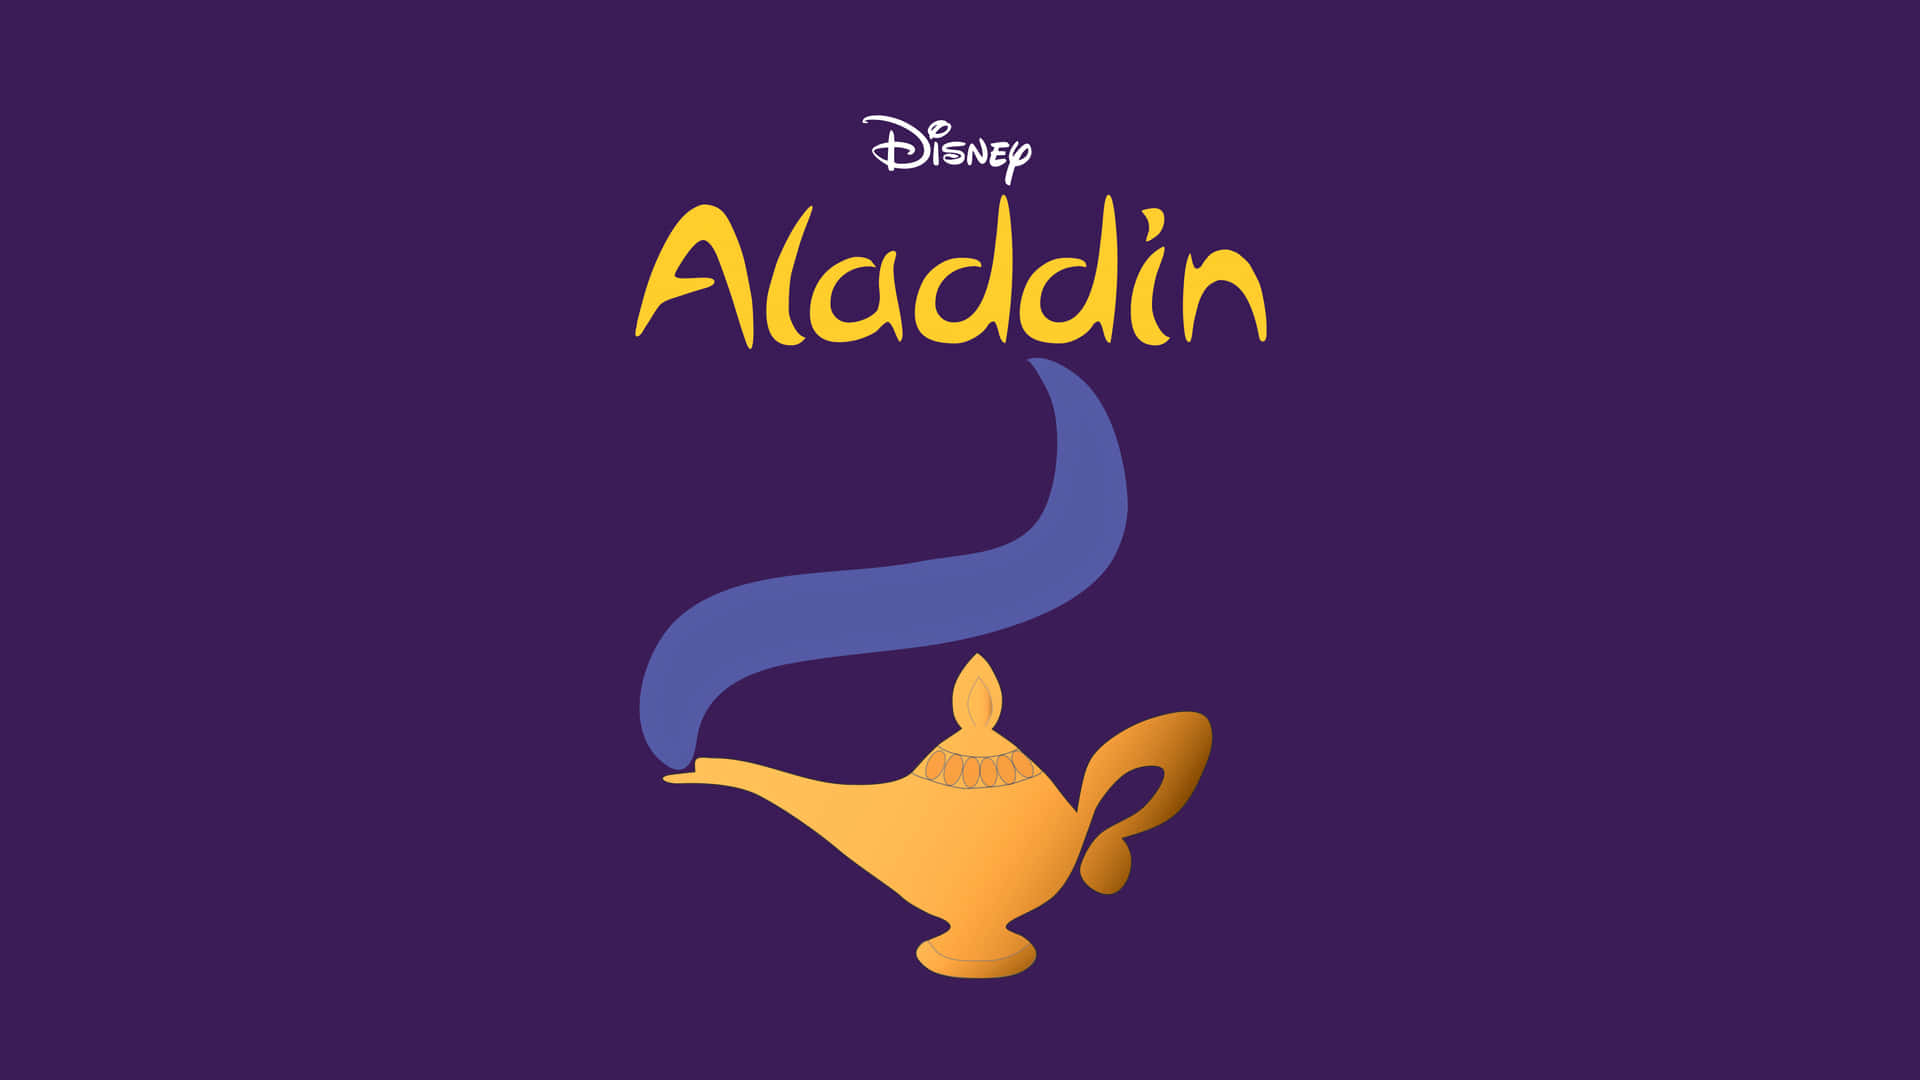 The Magical Lamp of Aladdin